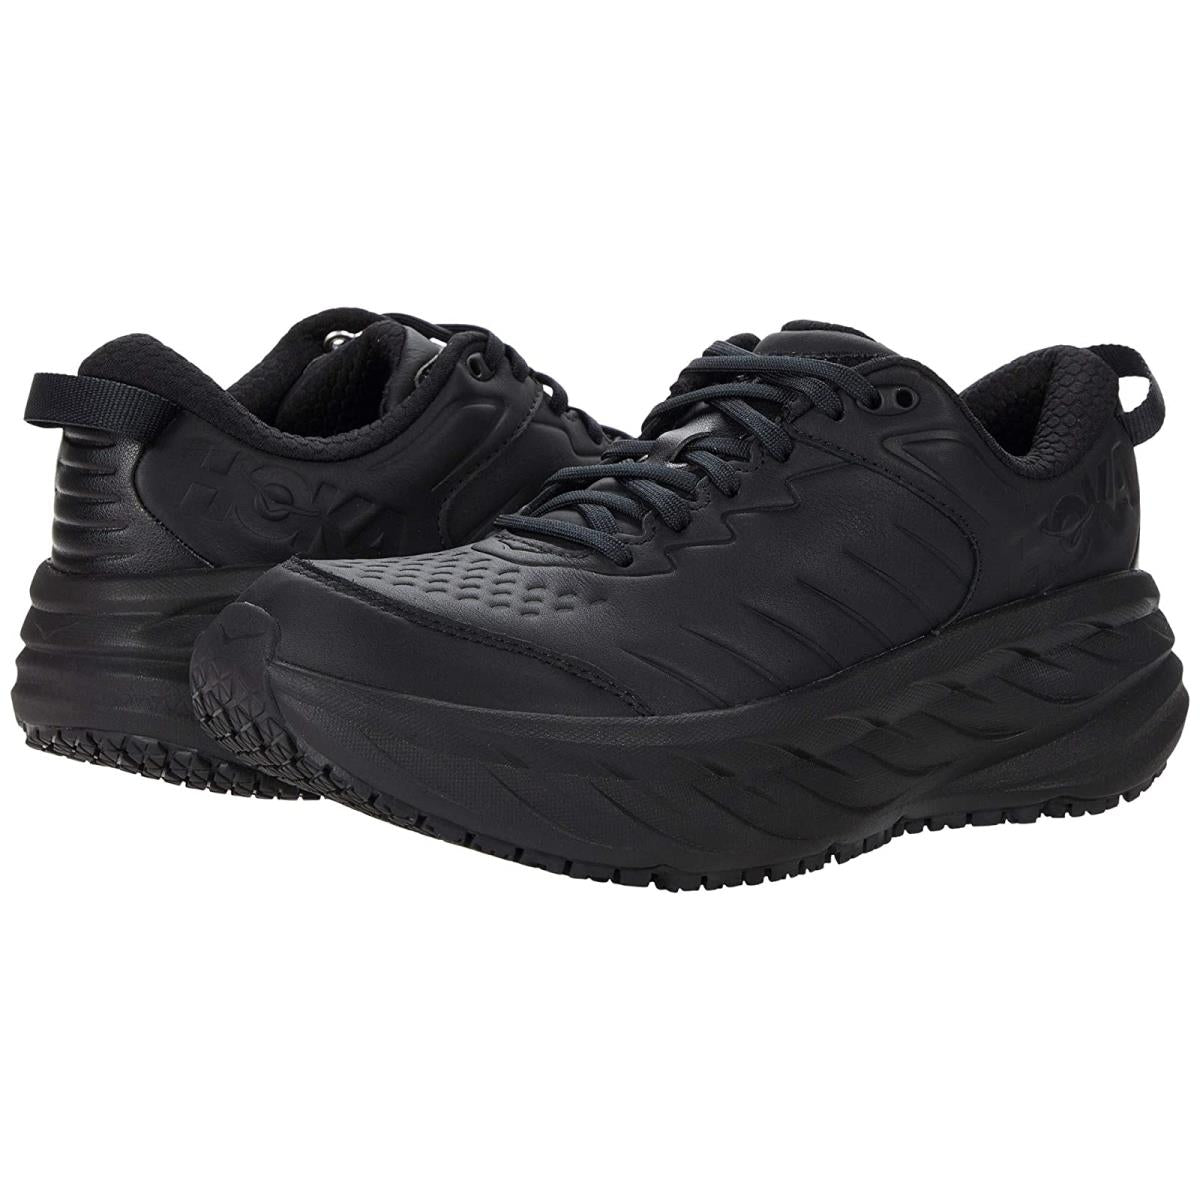 Hoka Bondi 8 Women's (Wide) Everyday Running Shoe - Black / Black - Size 9